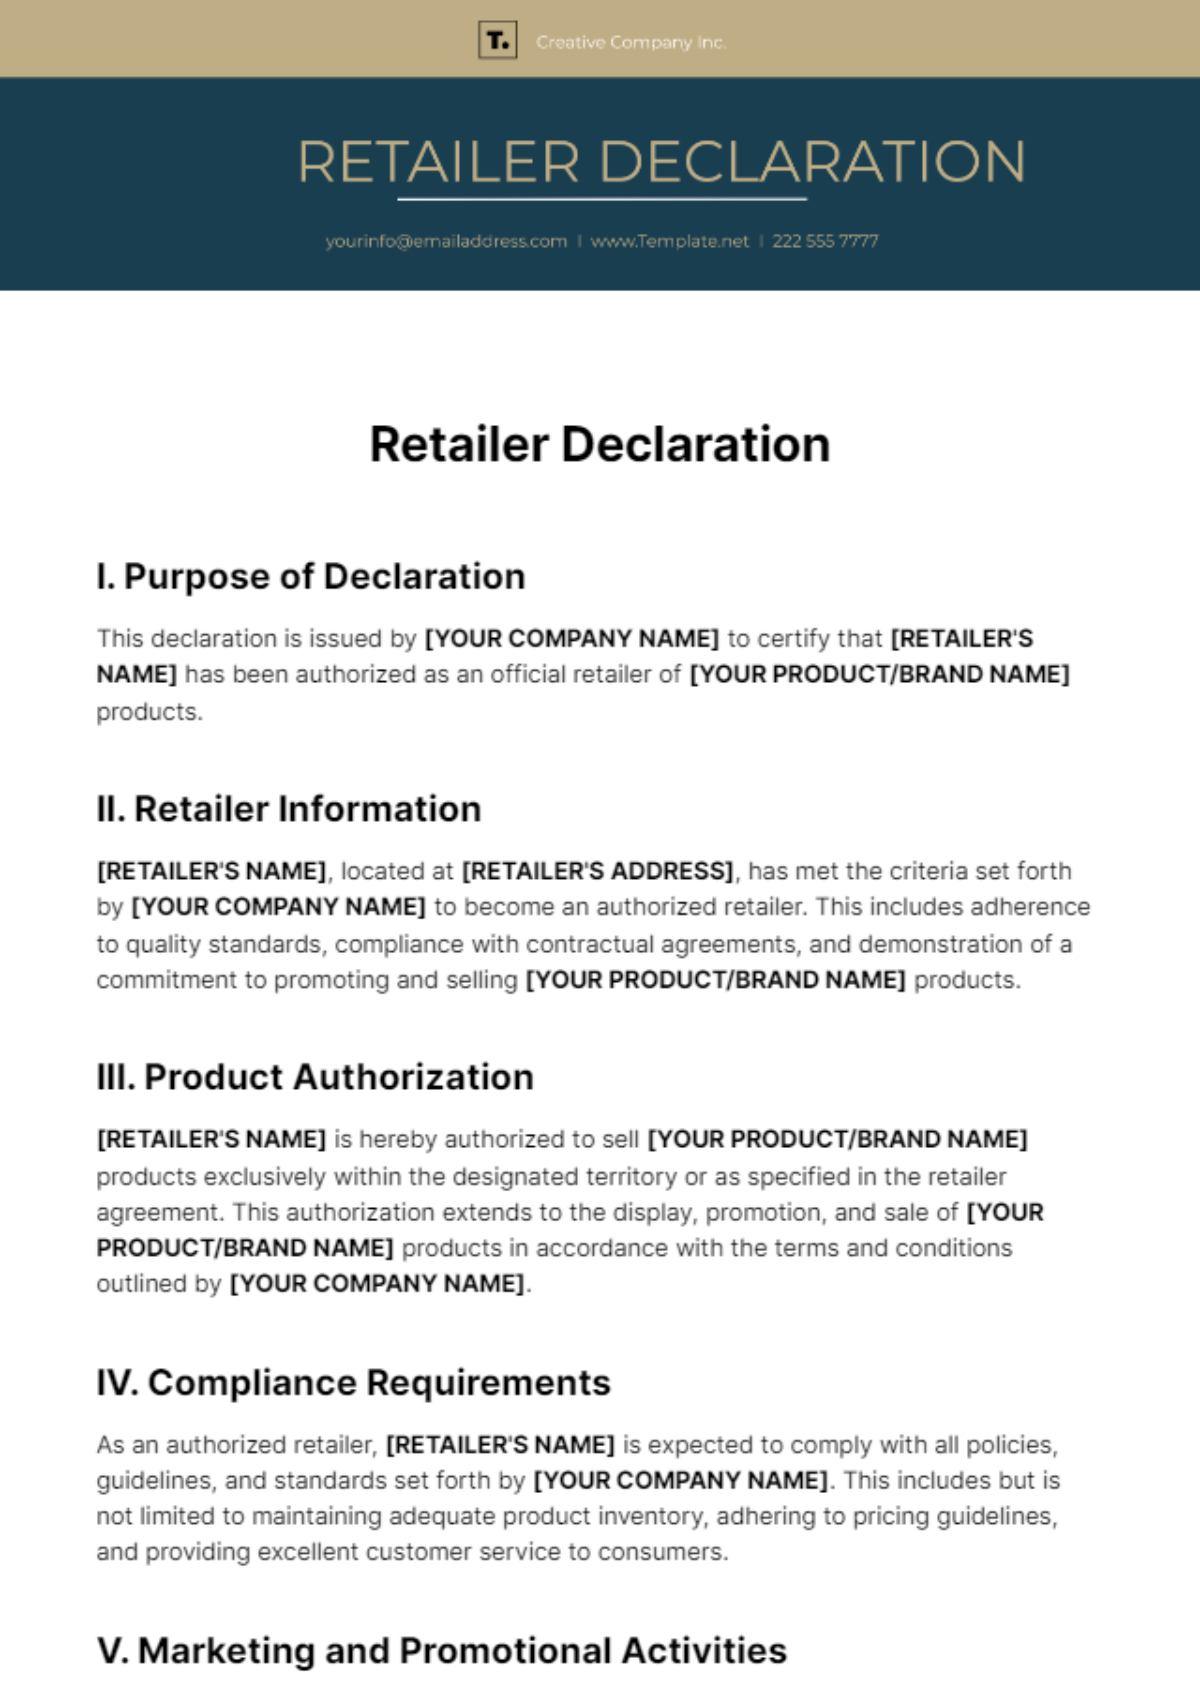 Retailer Declaration Template